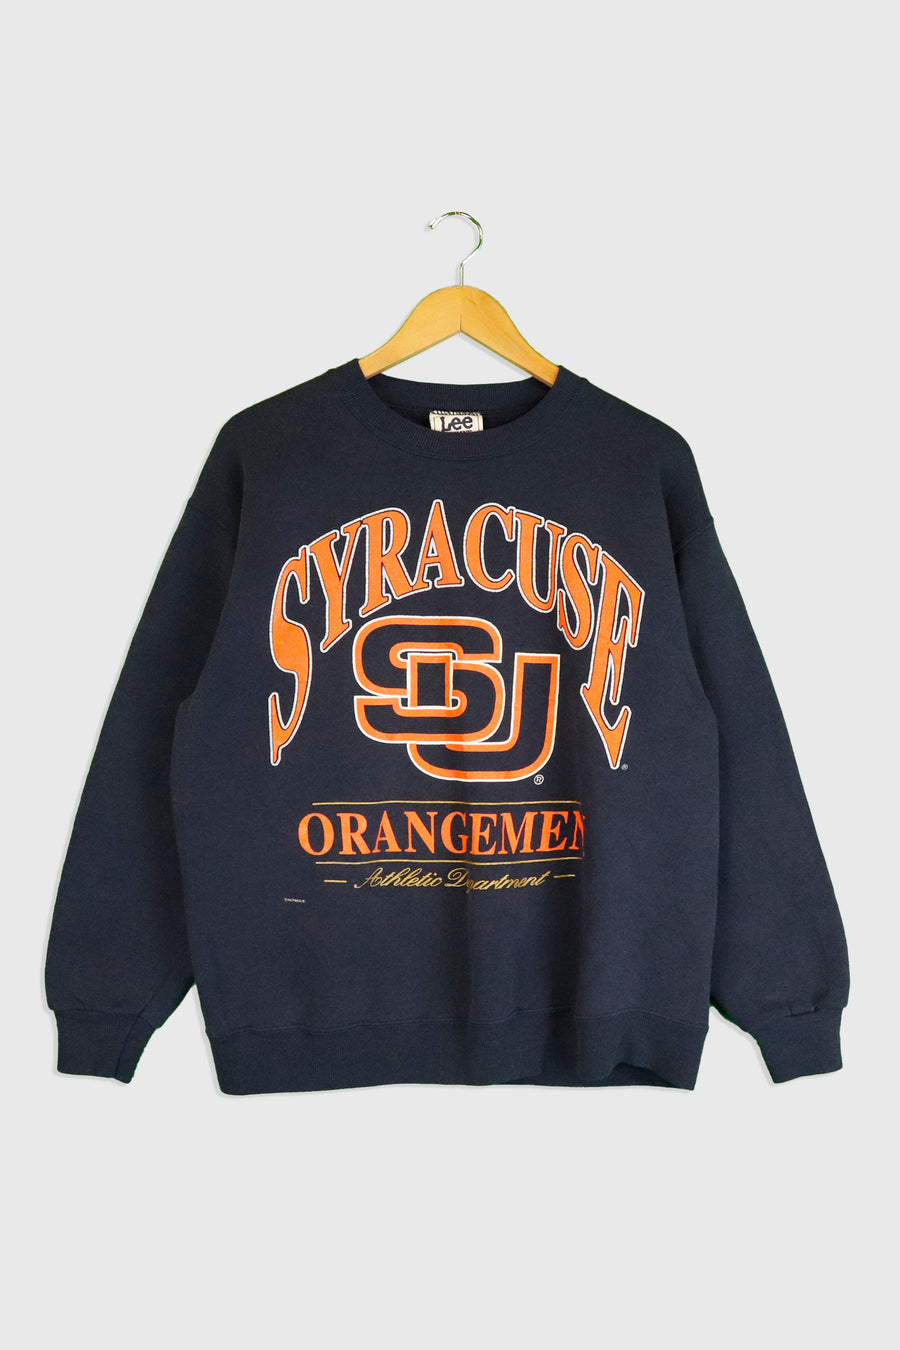 Vintage Syracuse Athletic Department Logo Crewneck Sweatshirt Sz M